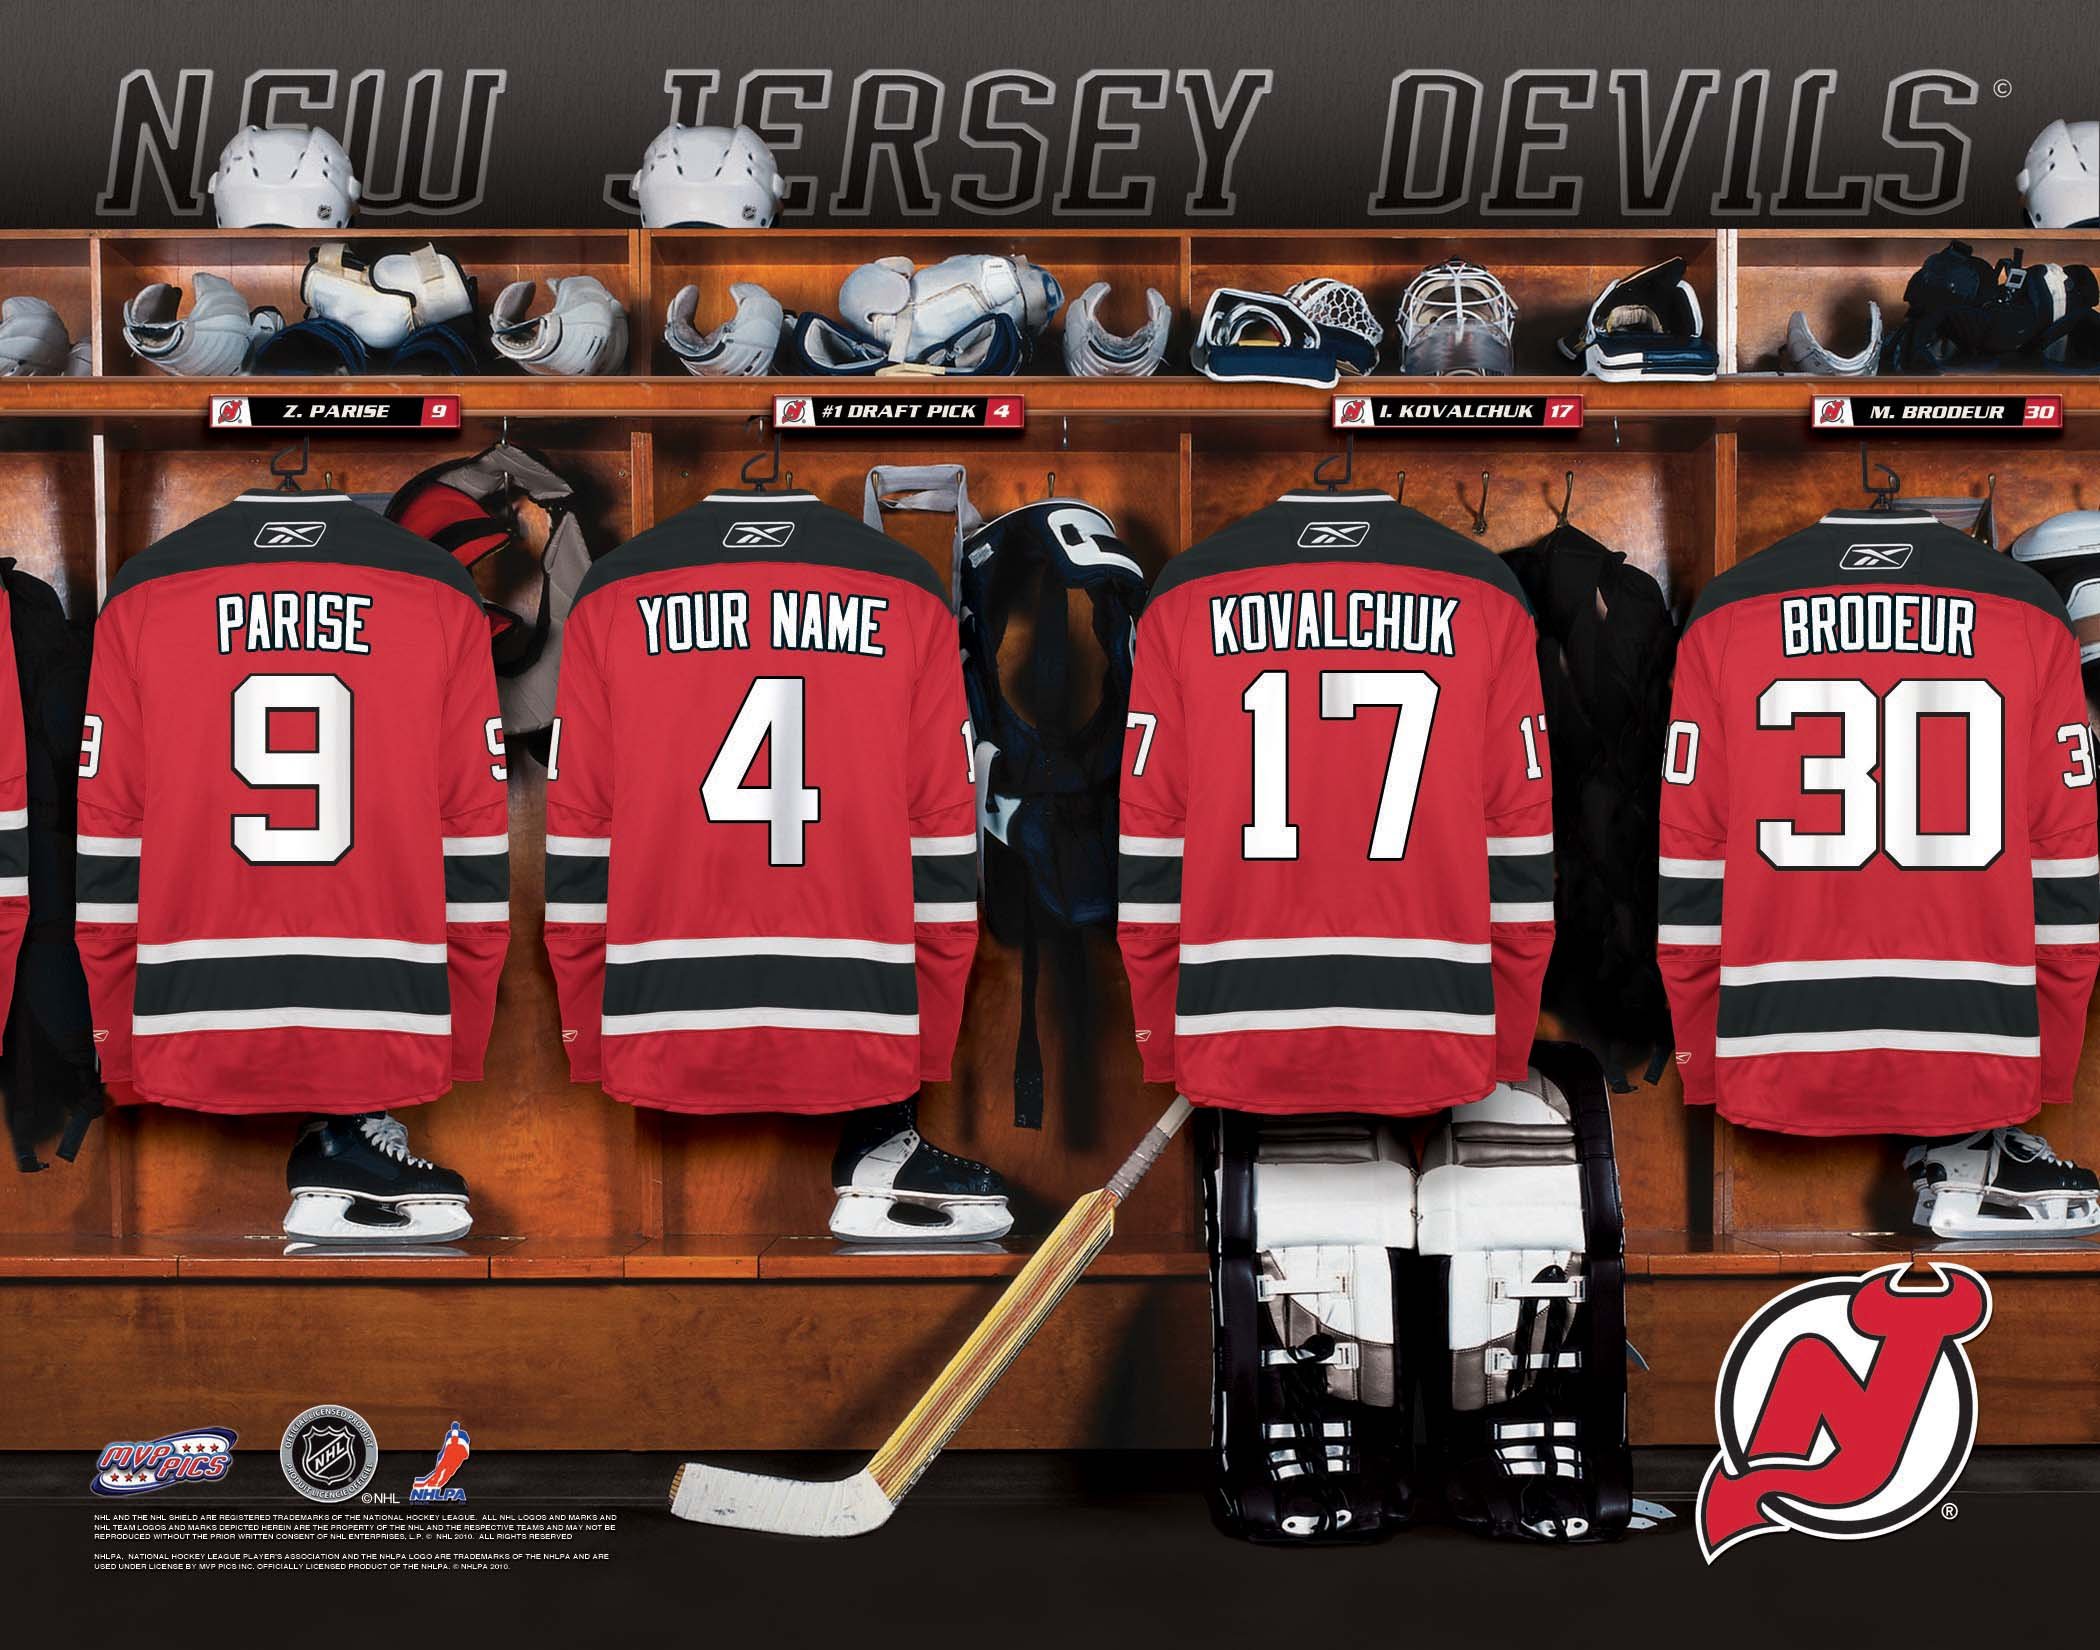 new, Jersey, Devils, Nhl, Hockey,  28 Wallpaper